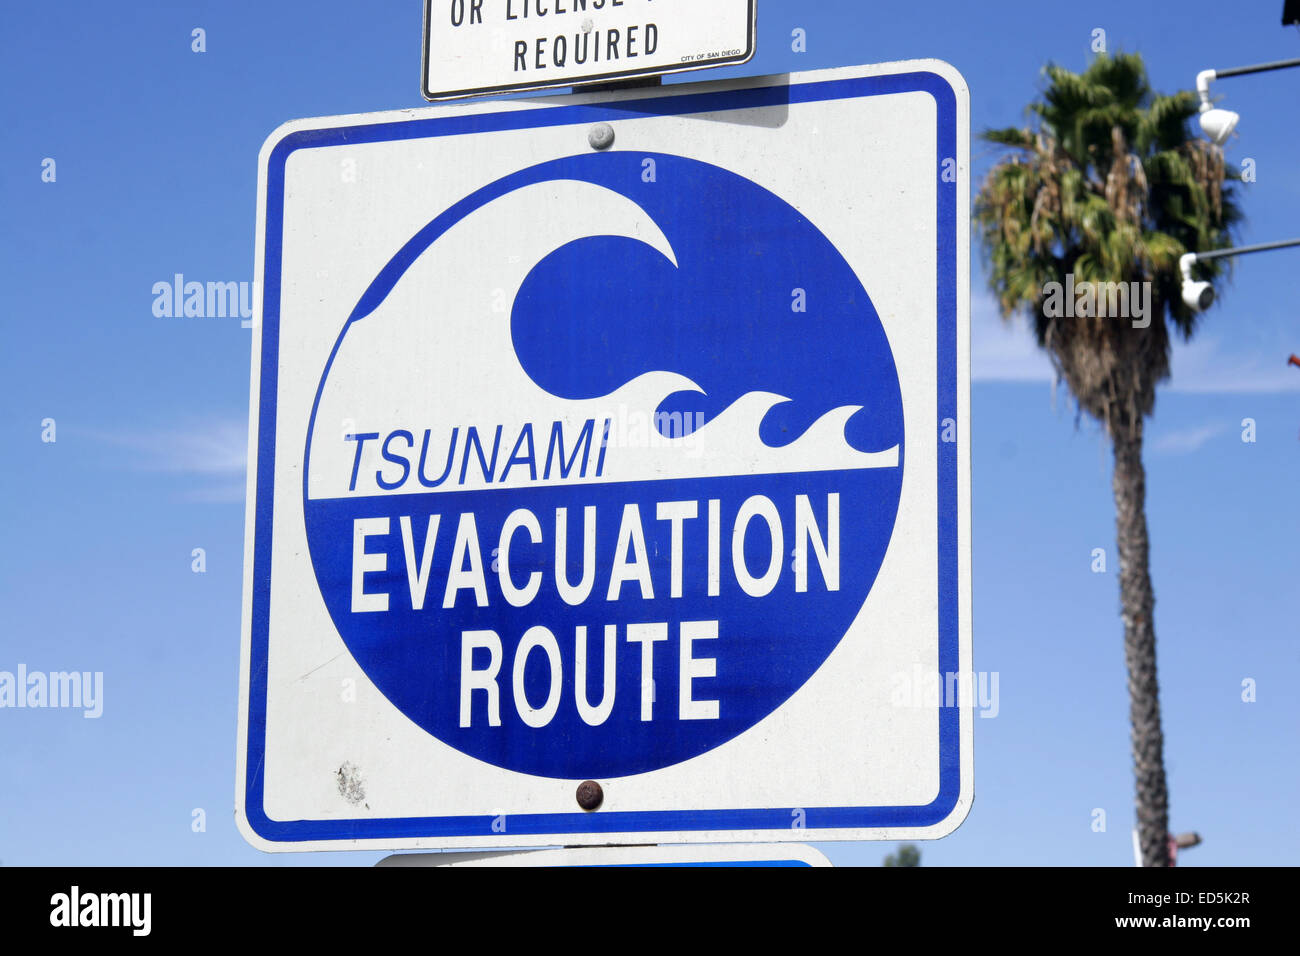 Tsunami evacuation route sign, San Diego, California, USA Stock Photo